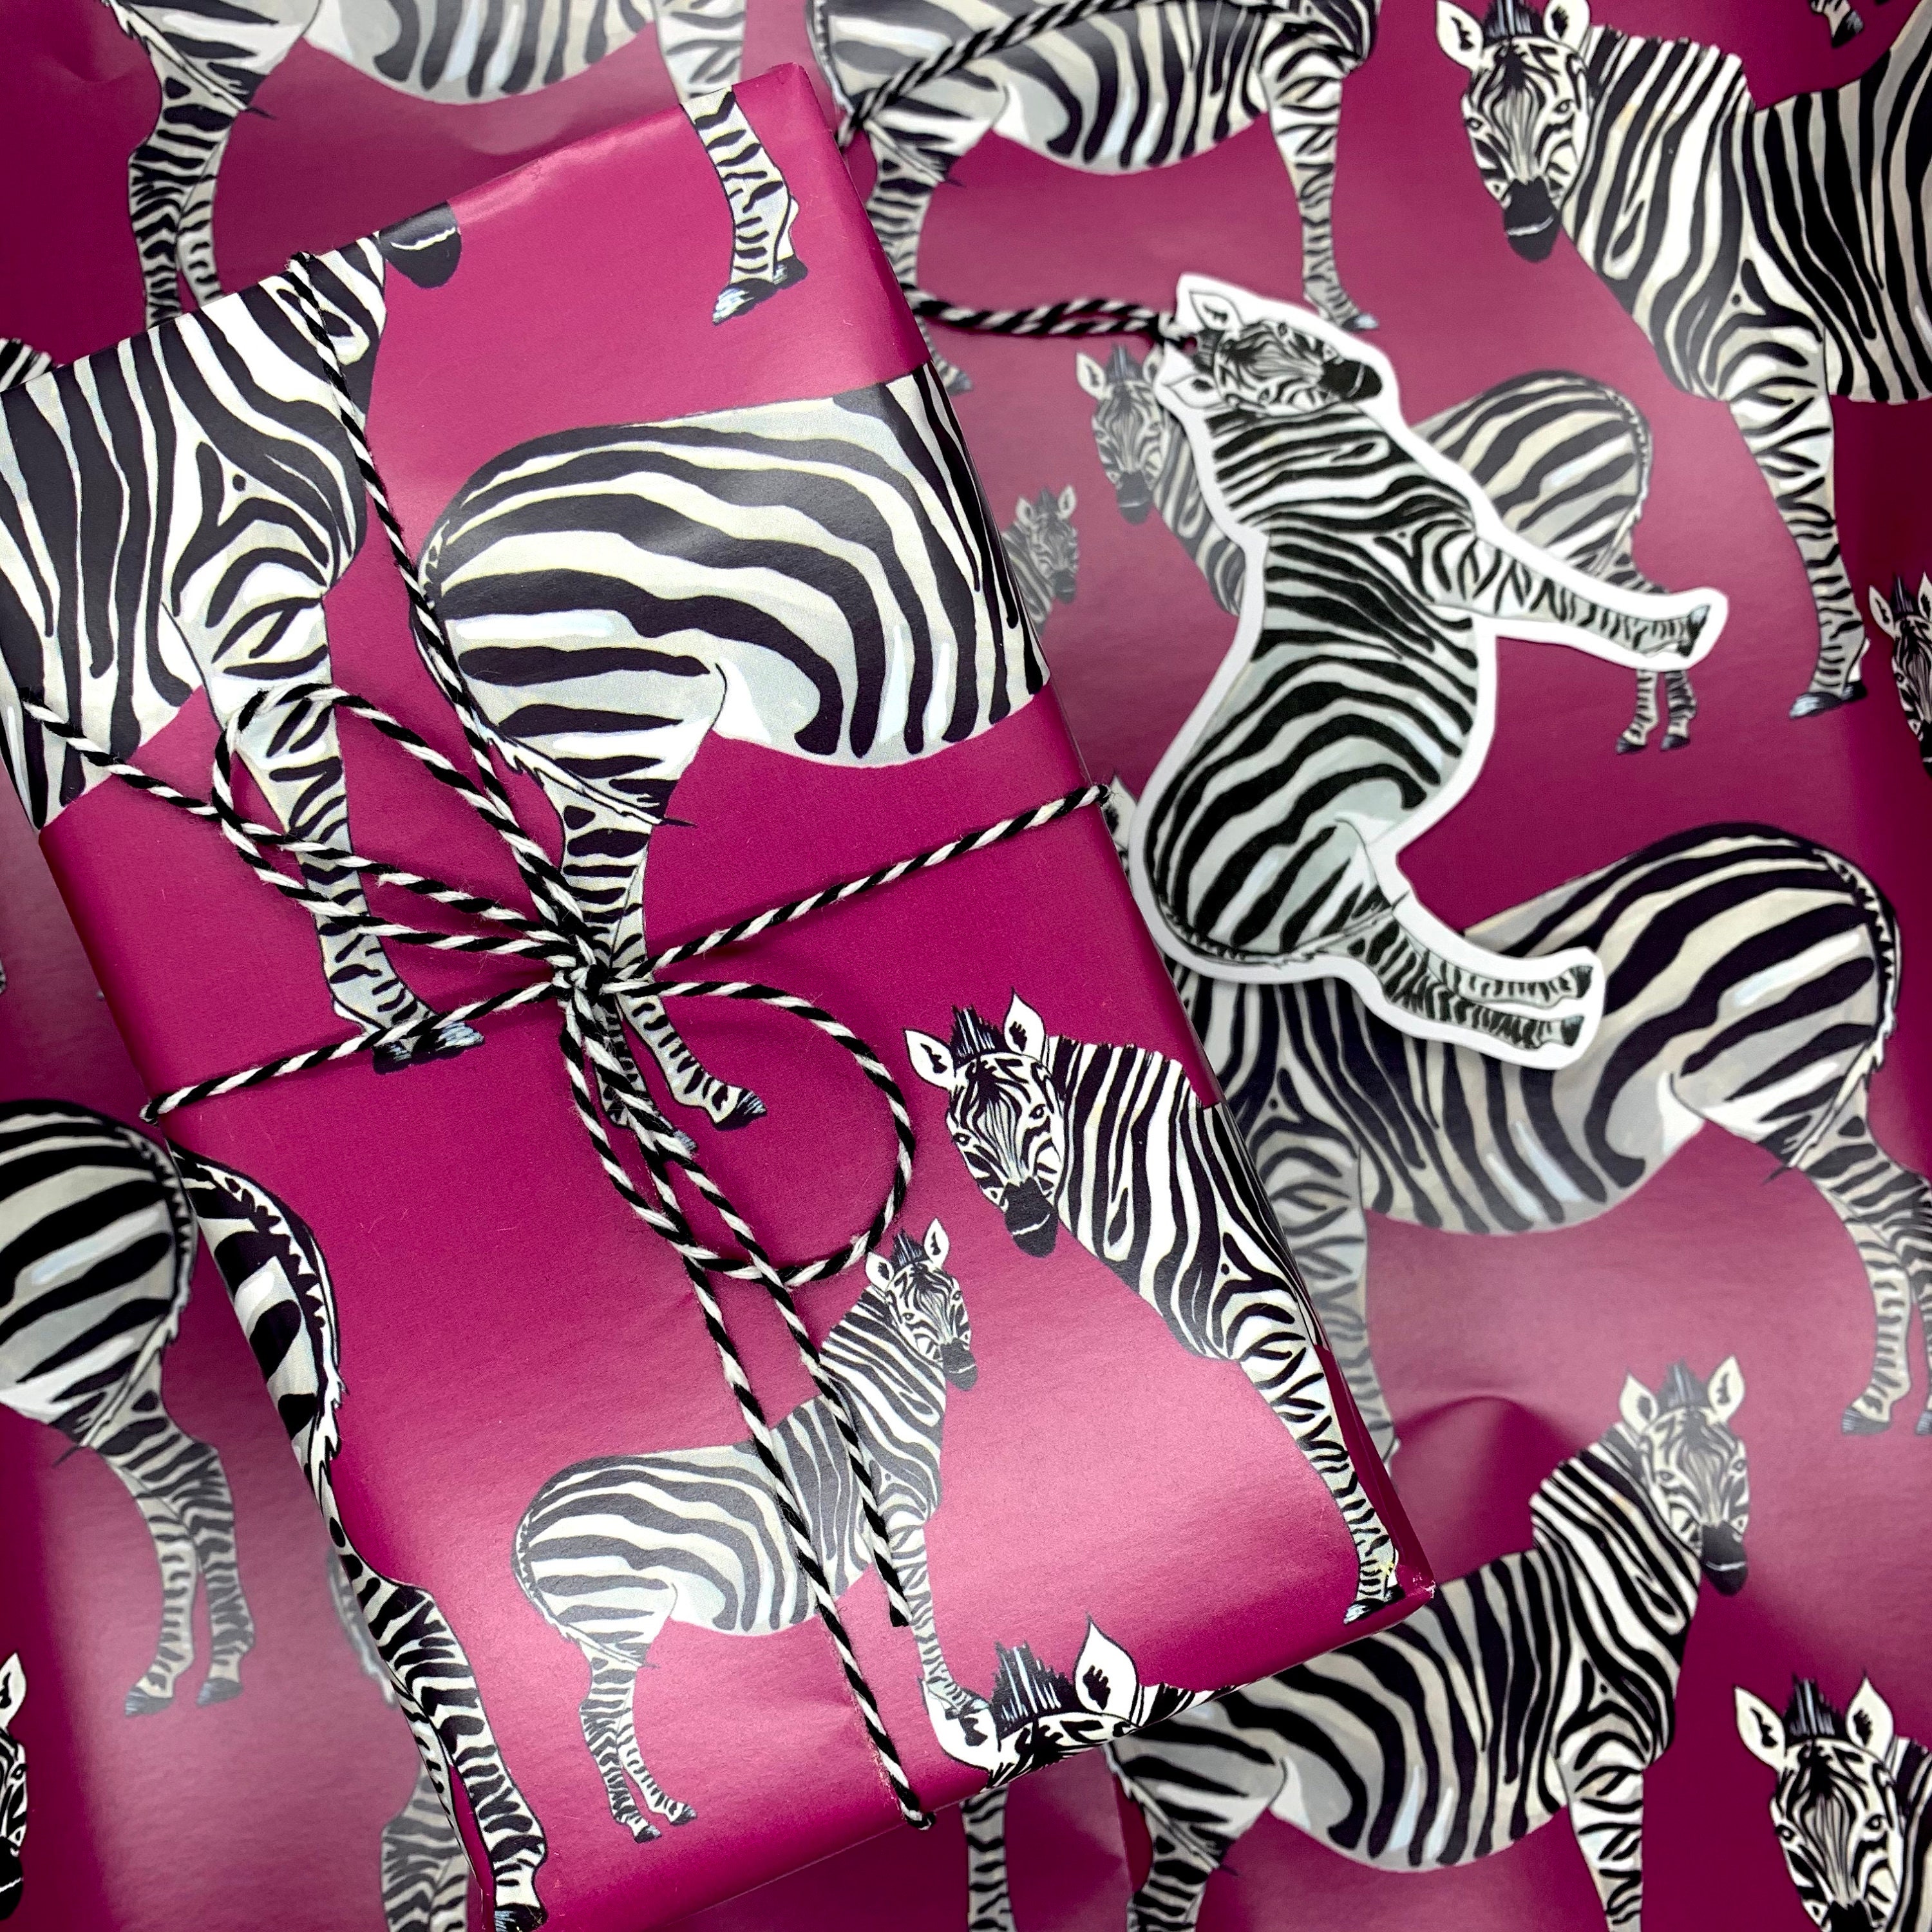 Metallic Foil Tissue Paper Sheet Shiny Gift Wrap Bags Solid African Safari Zebra 